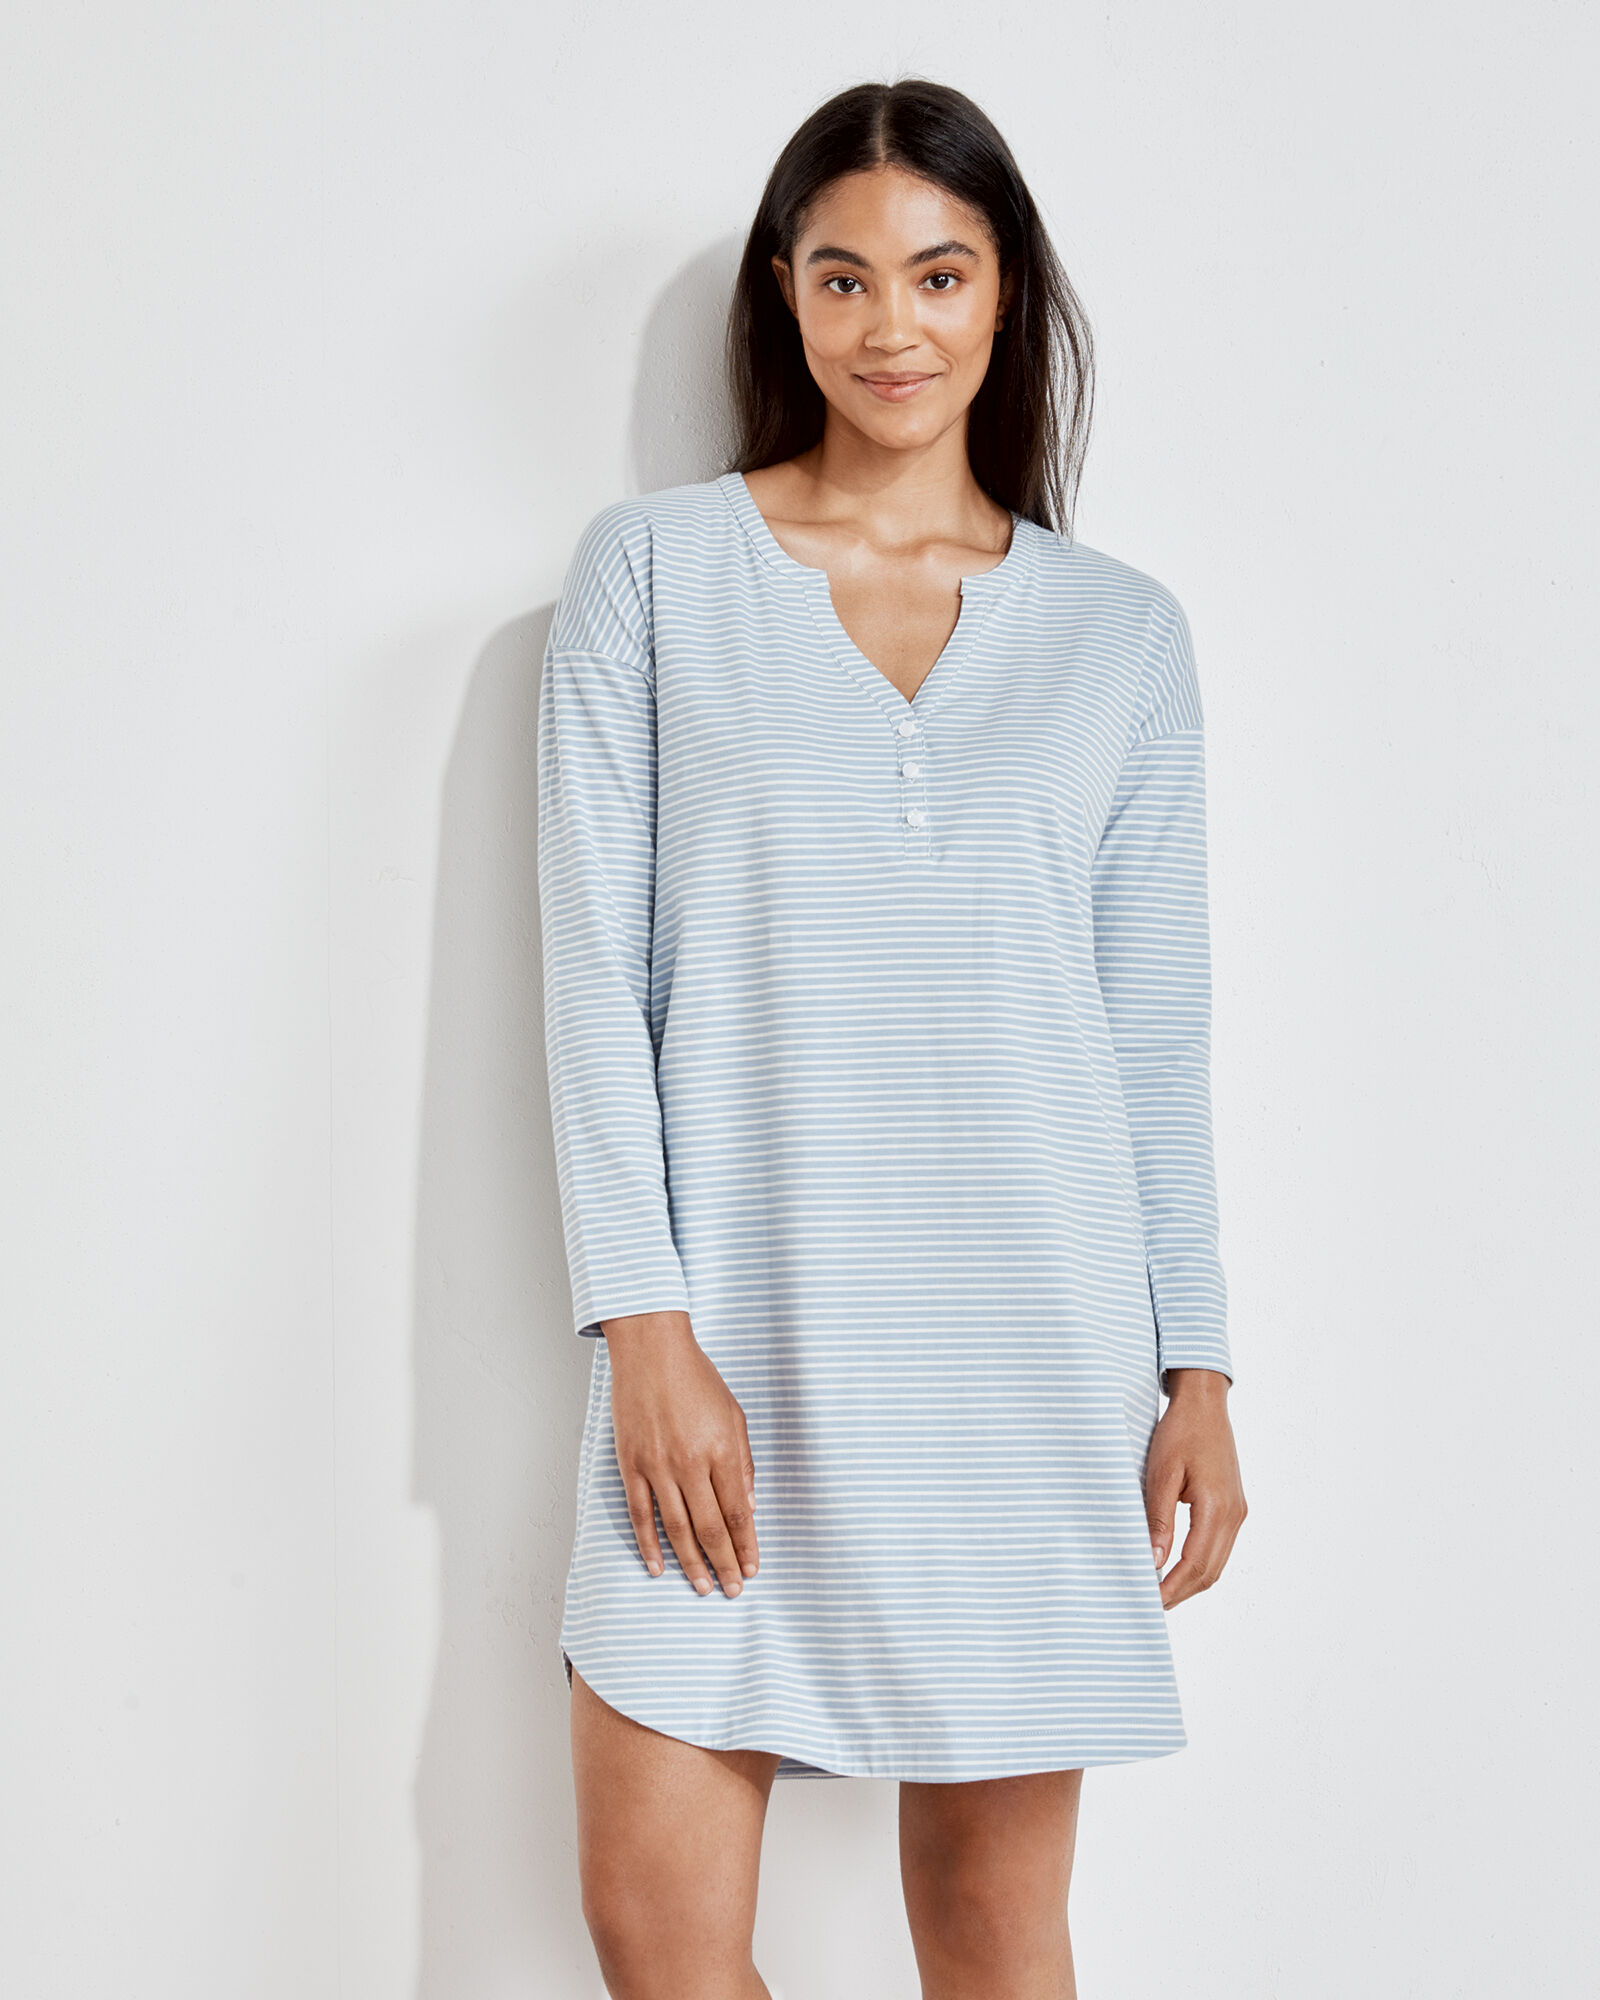 lantisan Cotton Knit Long Sleeve Nightgown for Women, Henley Full Length  Sleep Dress